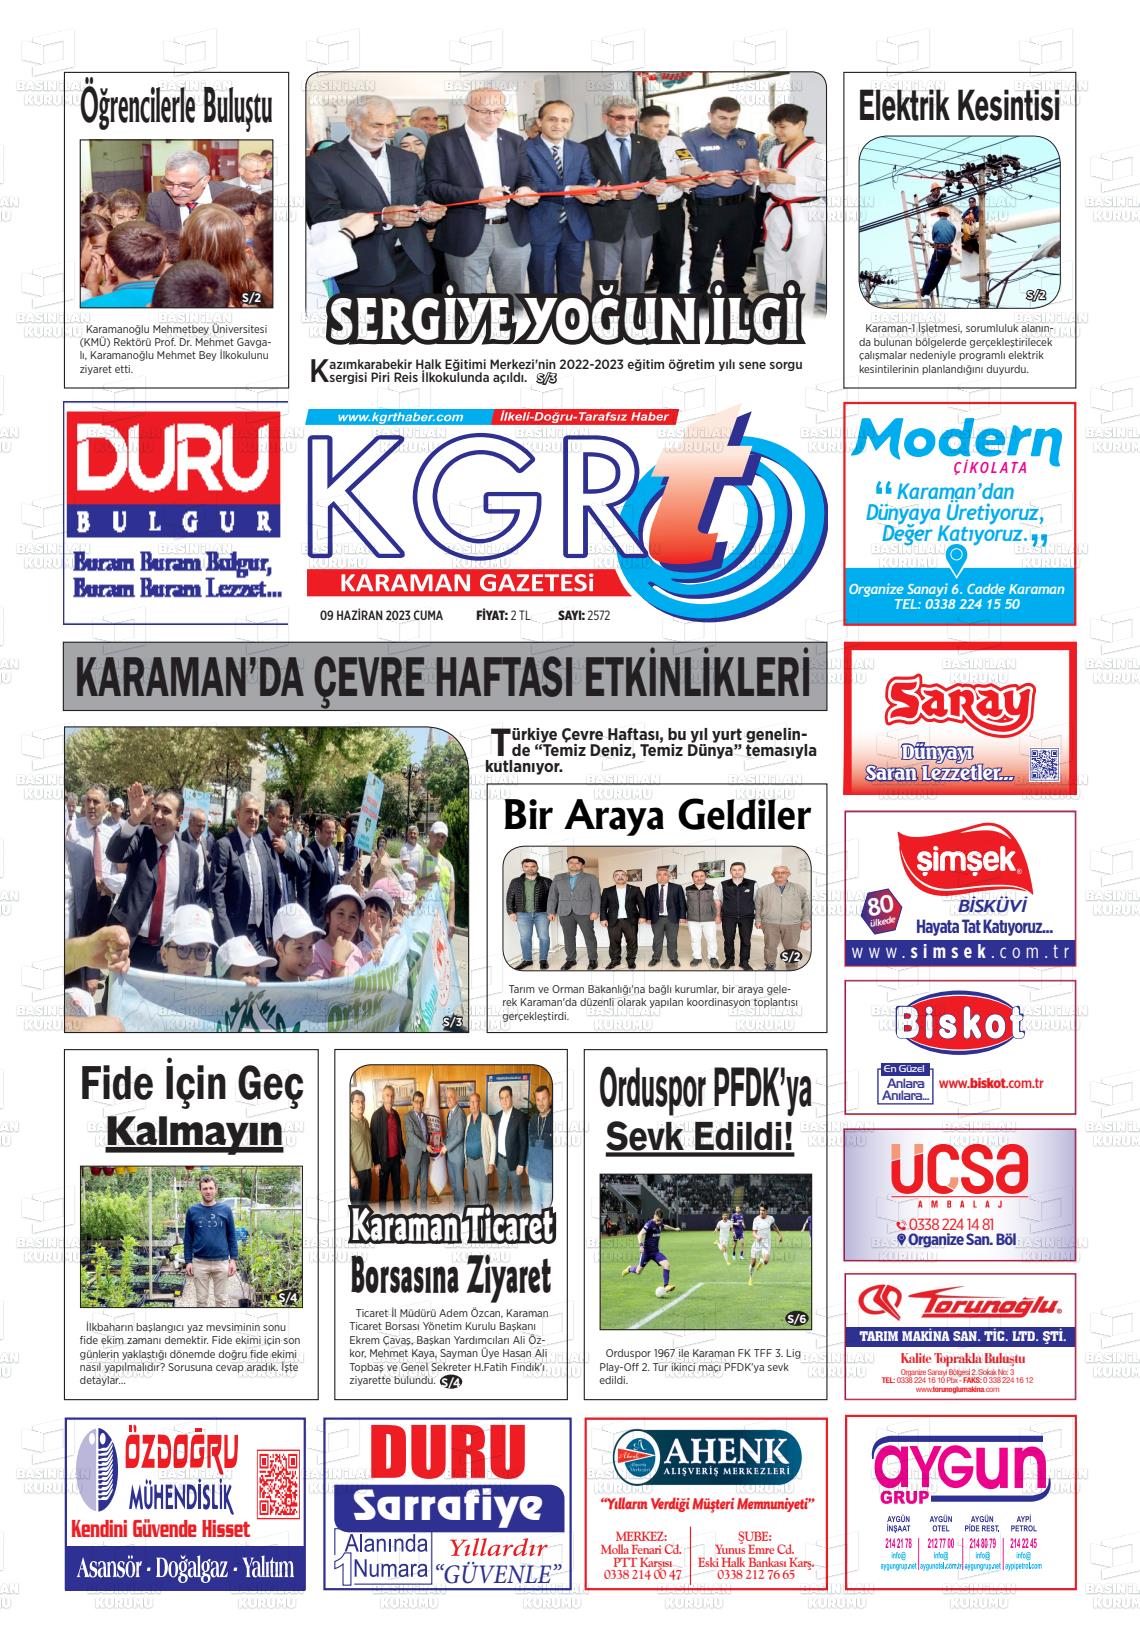 09 Haziran 2023 Kgrt Karaman Gazete Manşeti